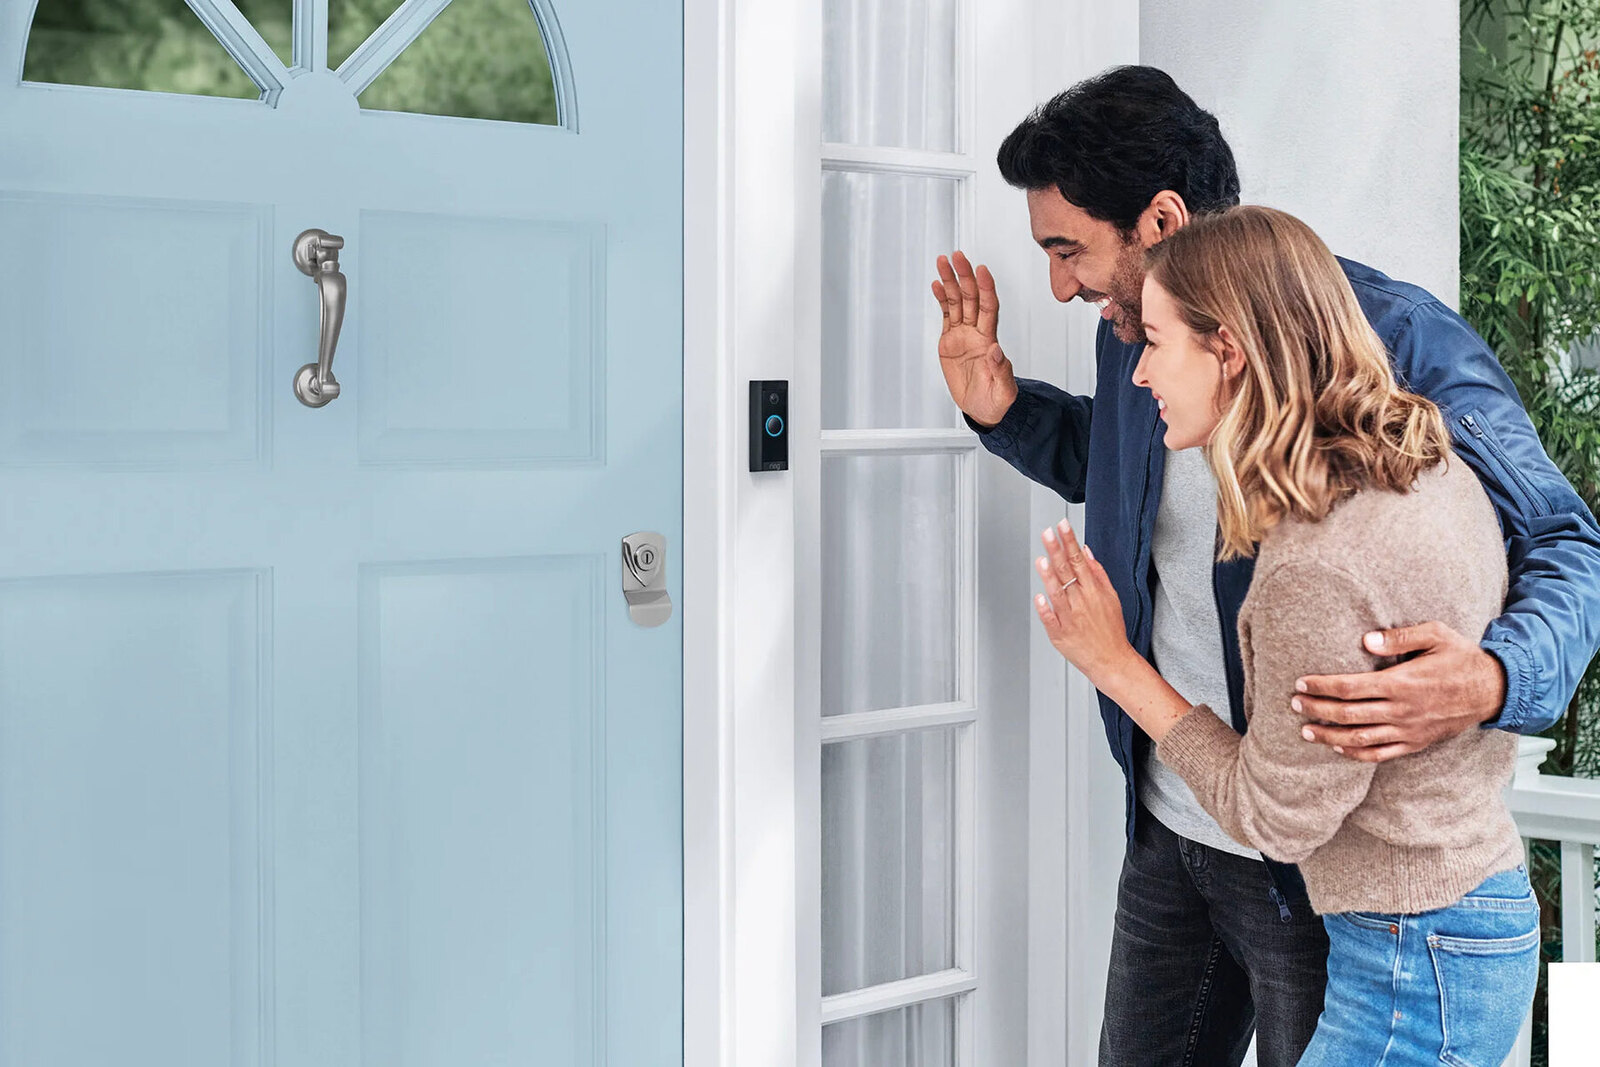 How Do I Talk Through My Ring Doorbell